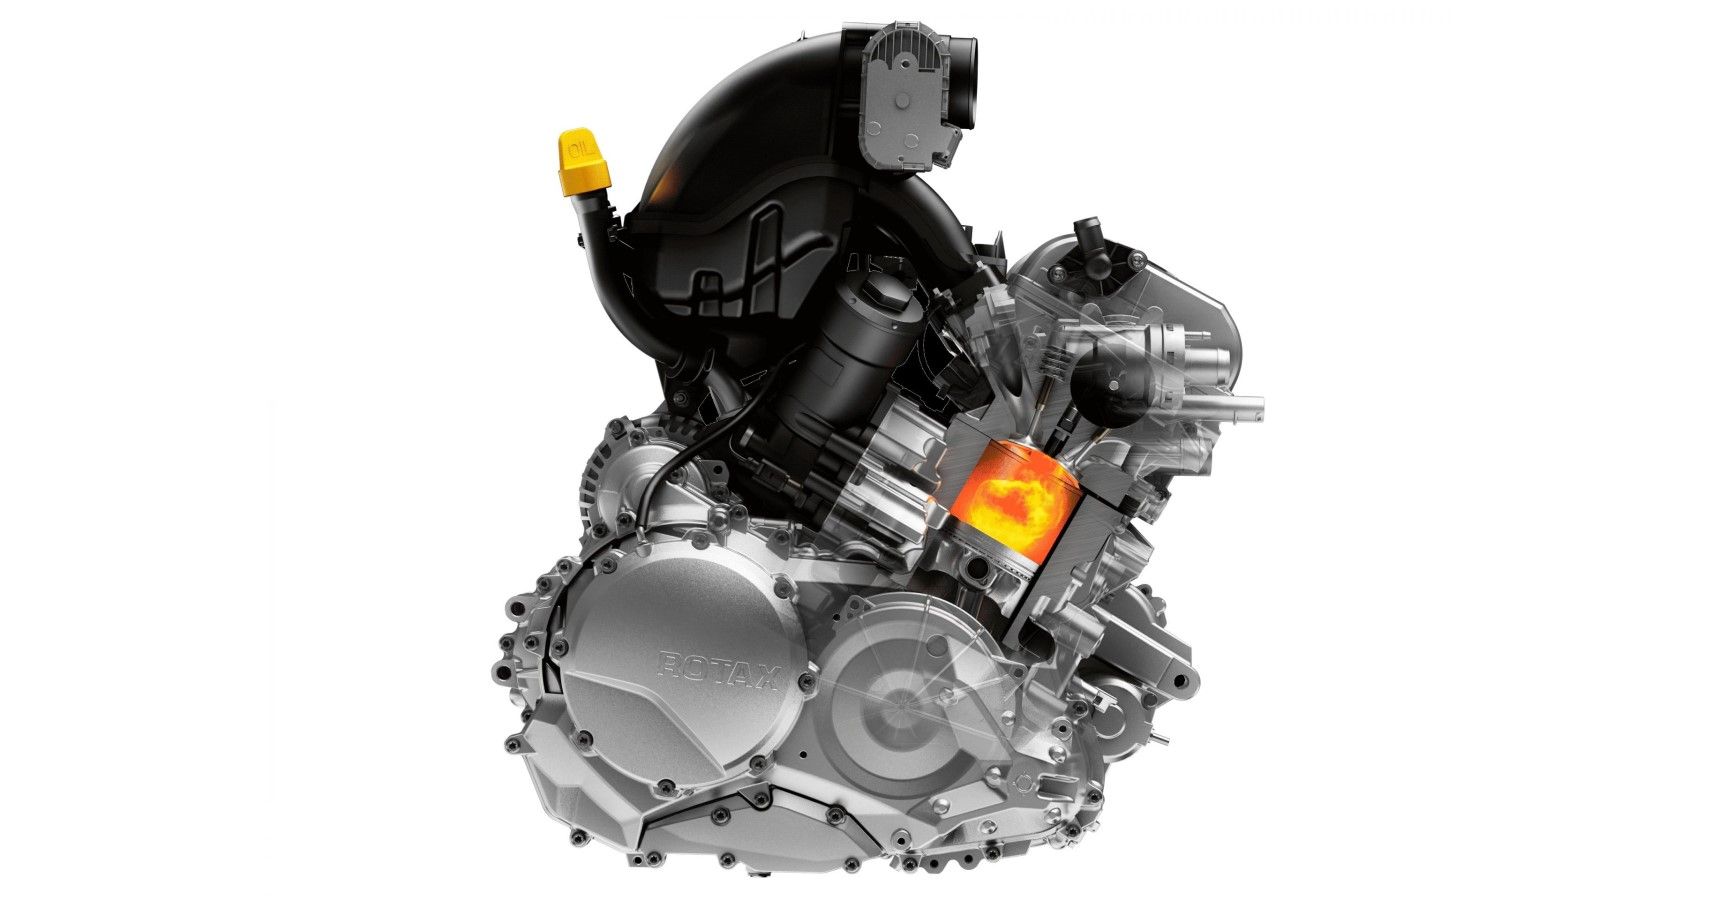 2021 Can-Am Spyder F3 ROTAX 1330 Inline-3 engine layout